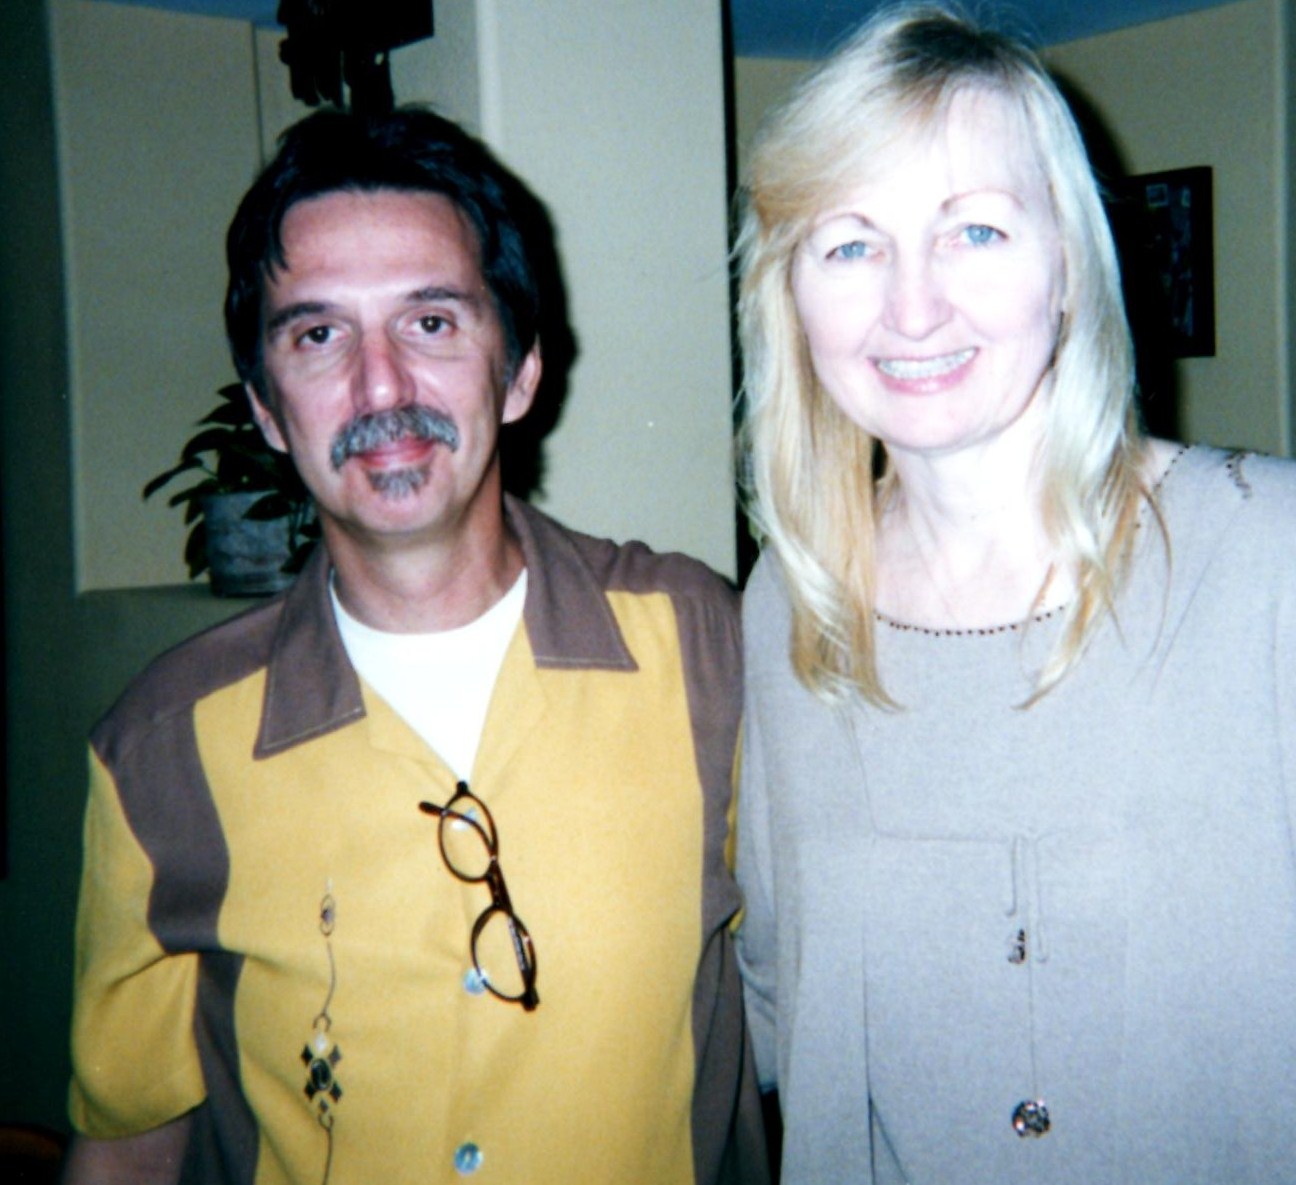 Joe Medieres, Head Writer for The Tonight Show with Jay Leno, with Martha Bolton